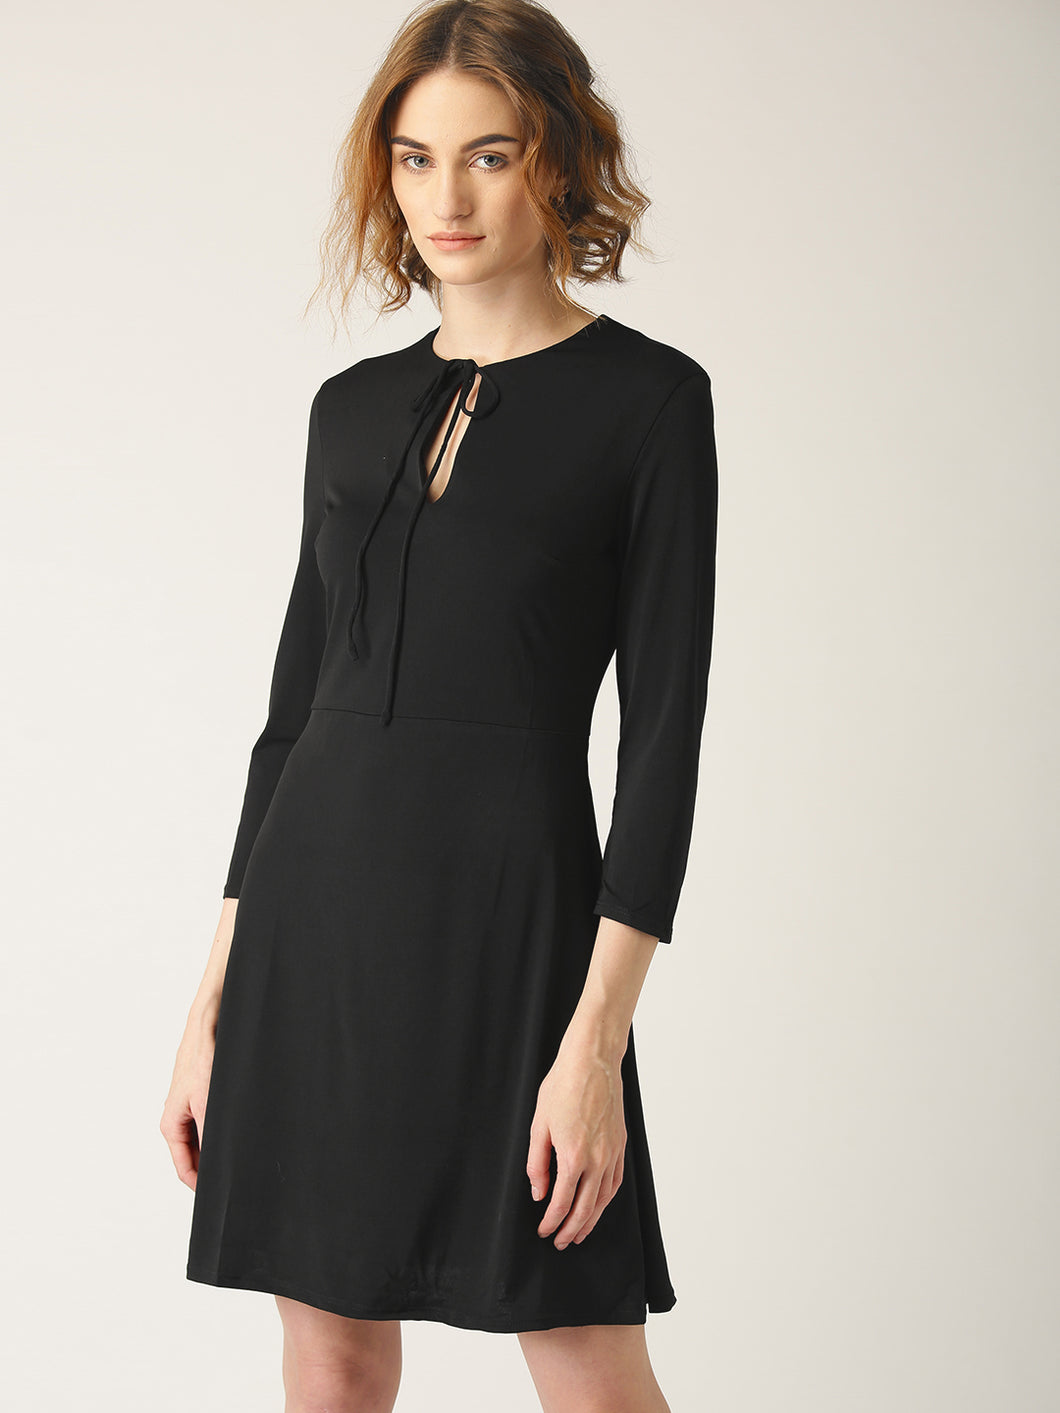 Black Solid A-Line Dress